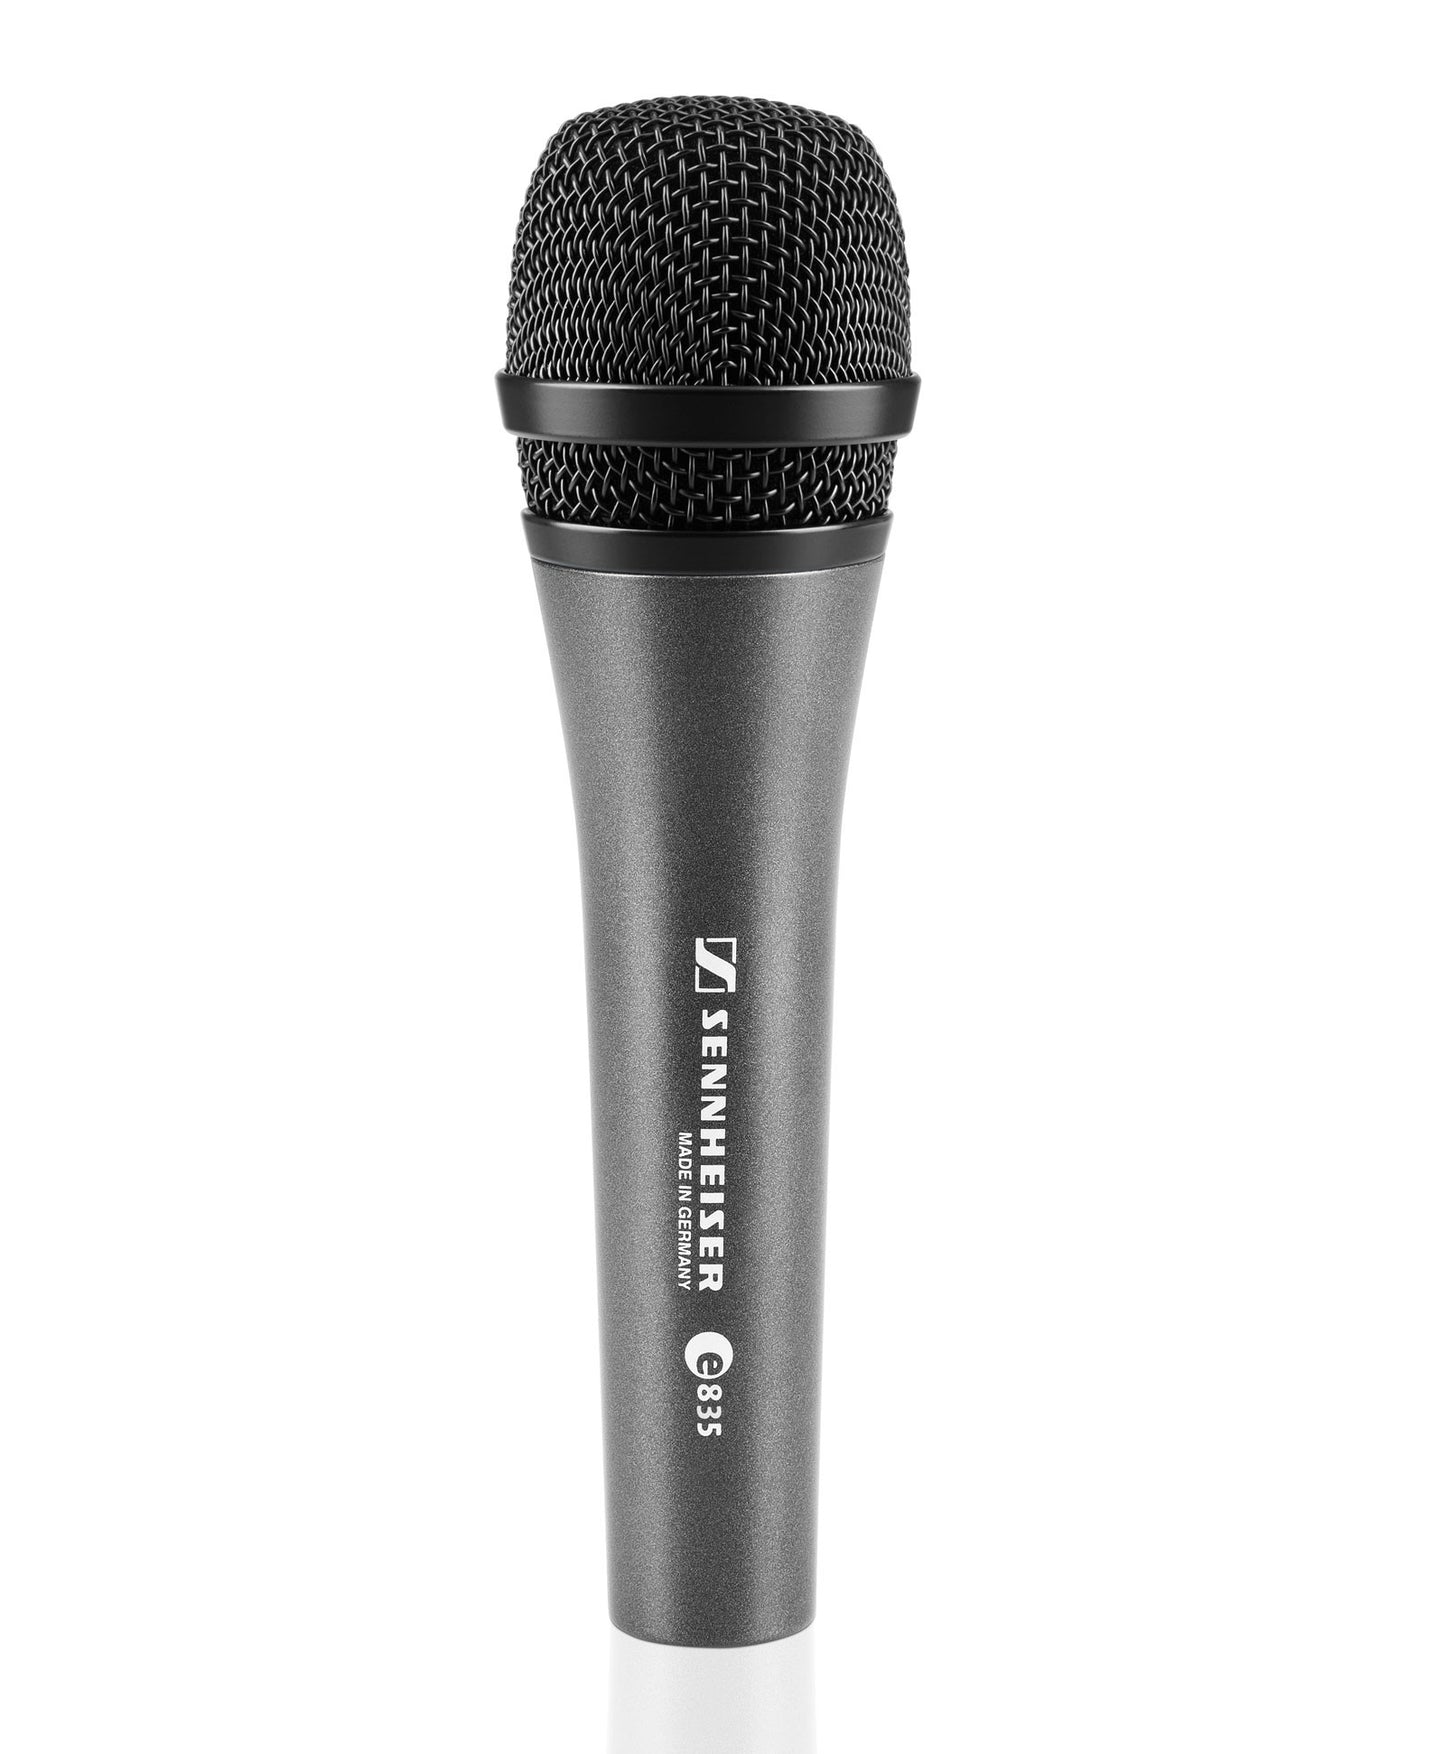 Sennheiser e 835 Dynamic Cardioid Stage Microphone